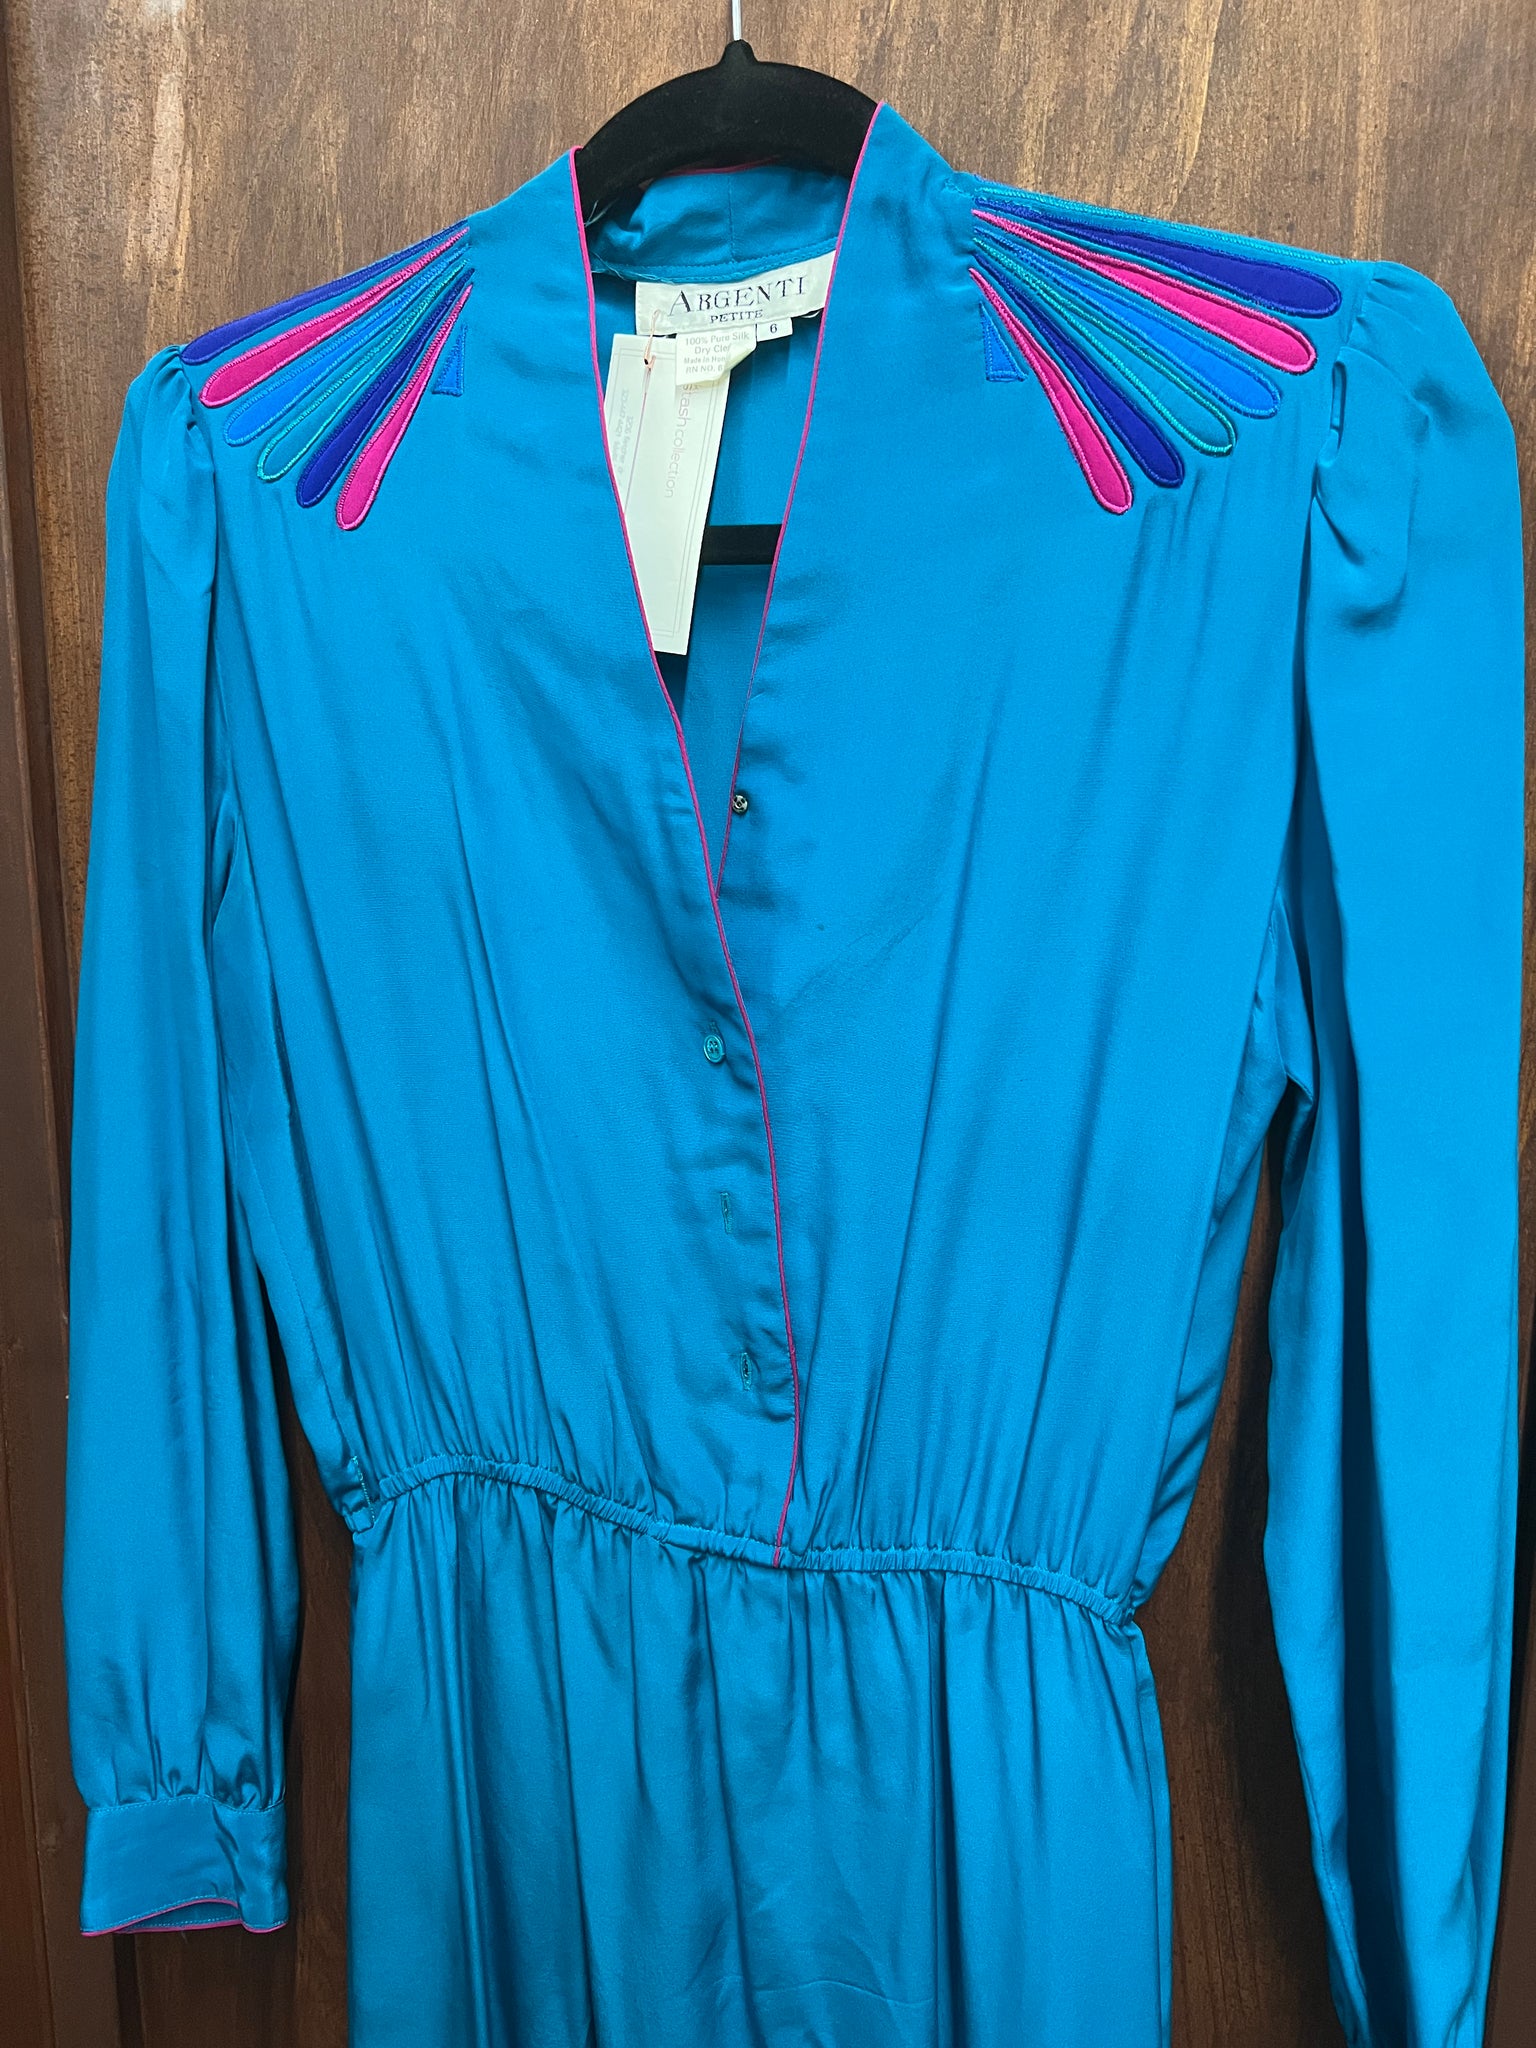 1970s -DRESS- Argenti teal blue silk w/pink purple accents